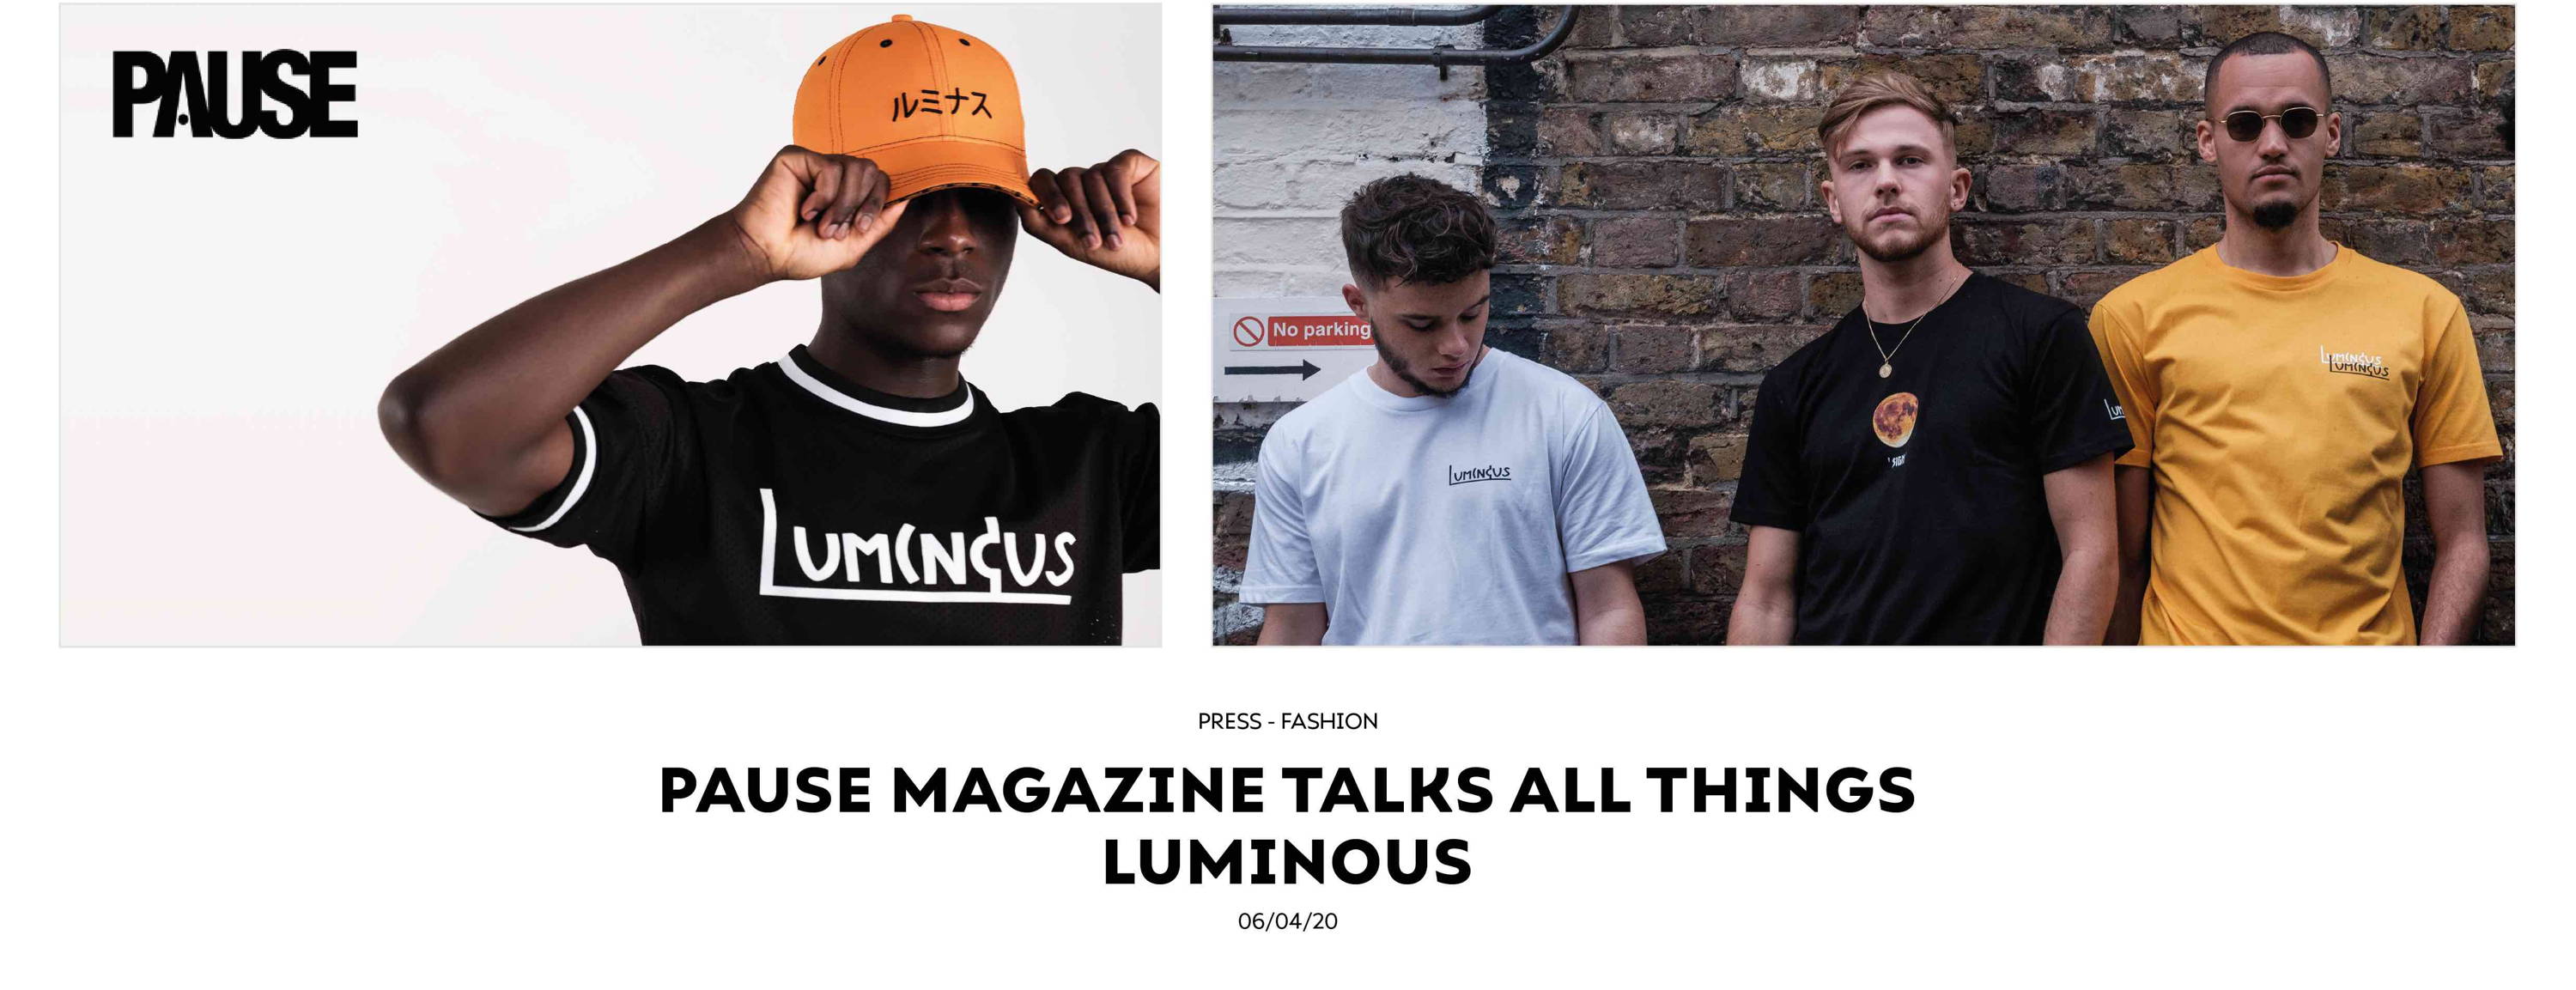 PAUSE Magazine Talks All Things Luminous